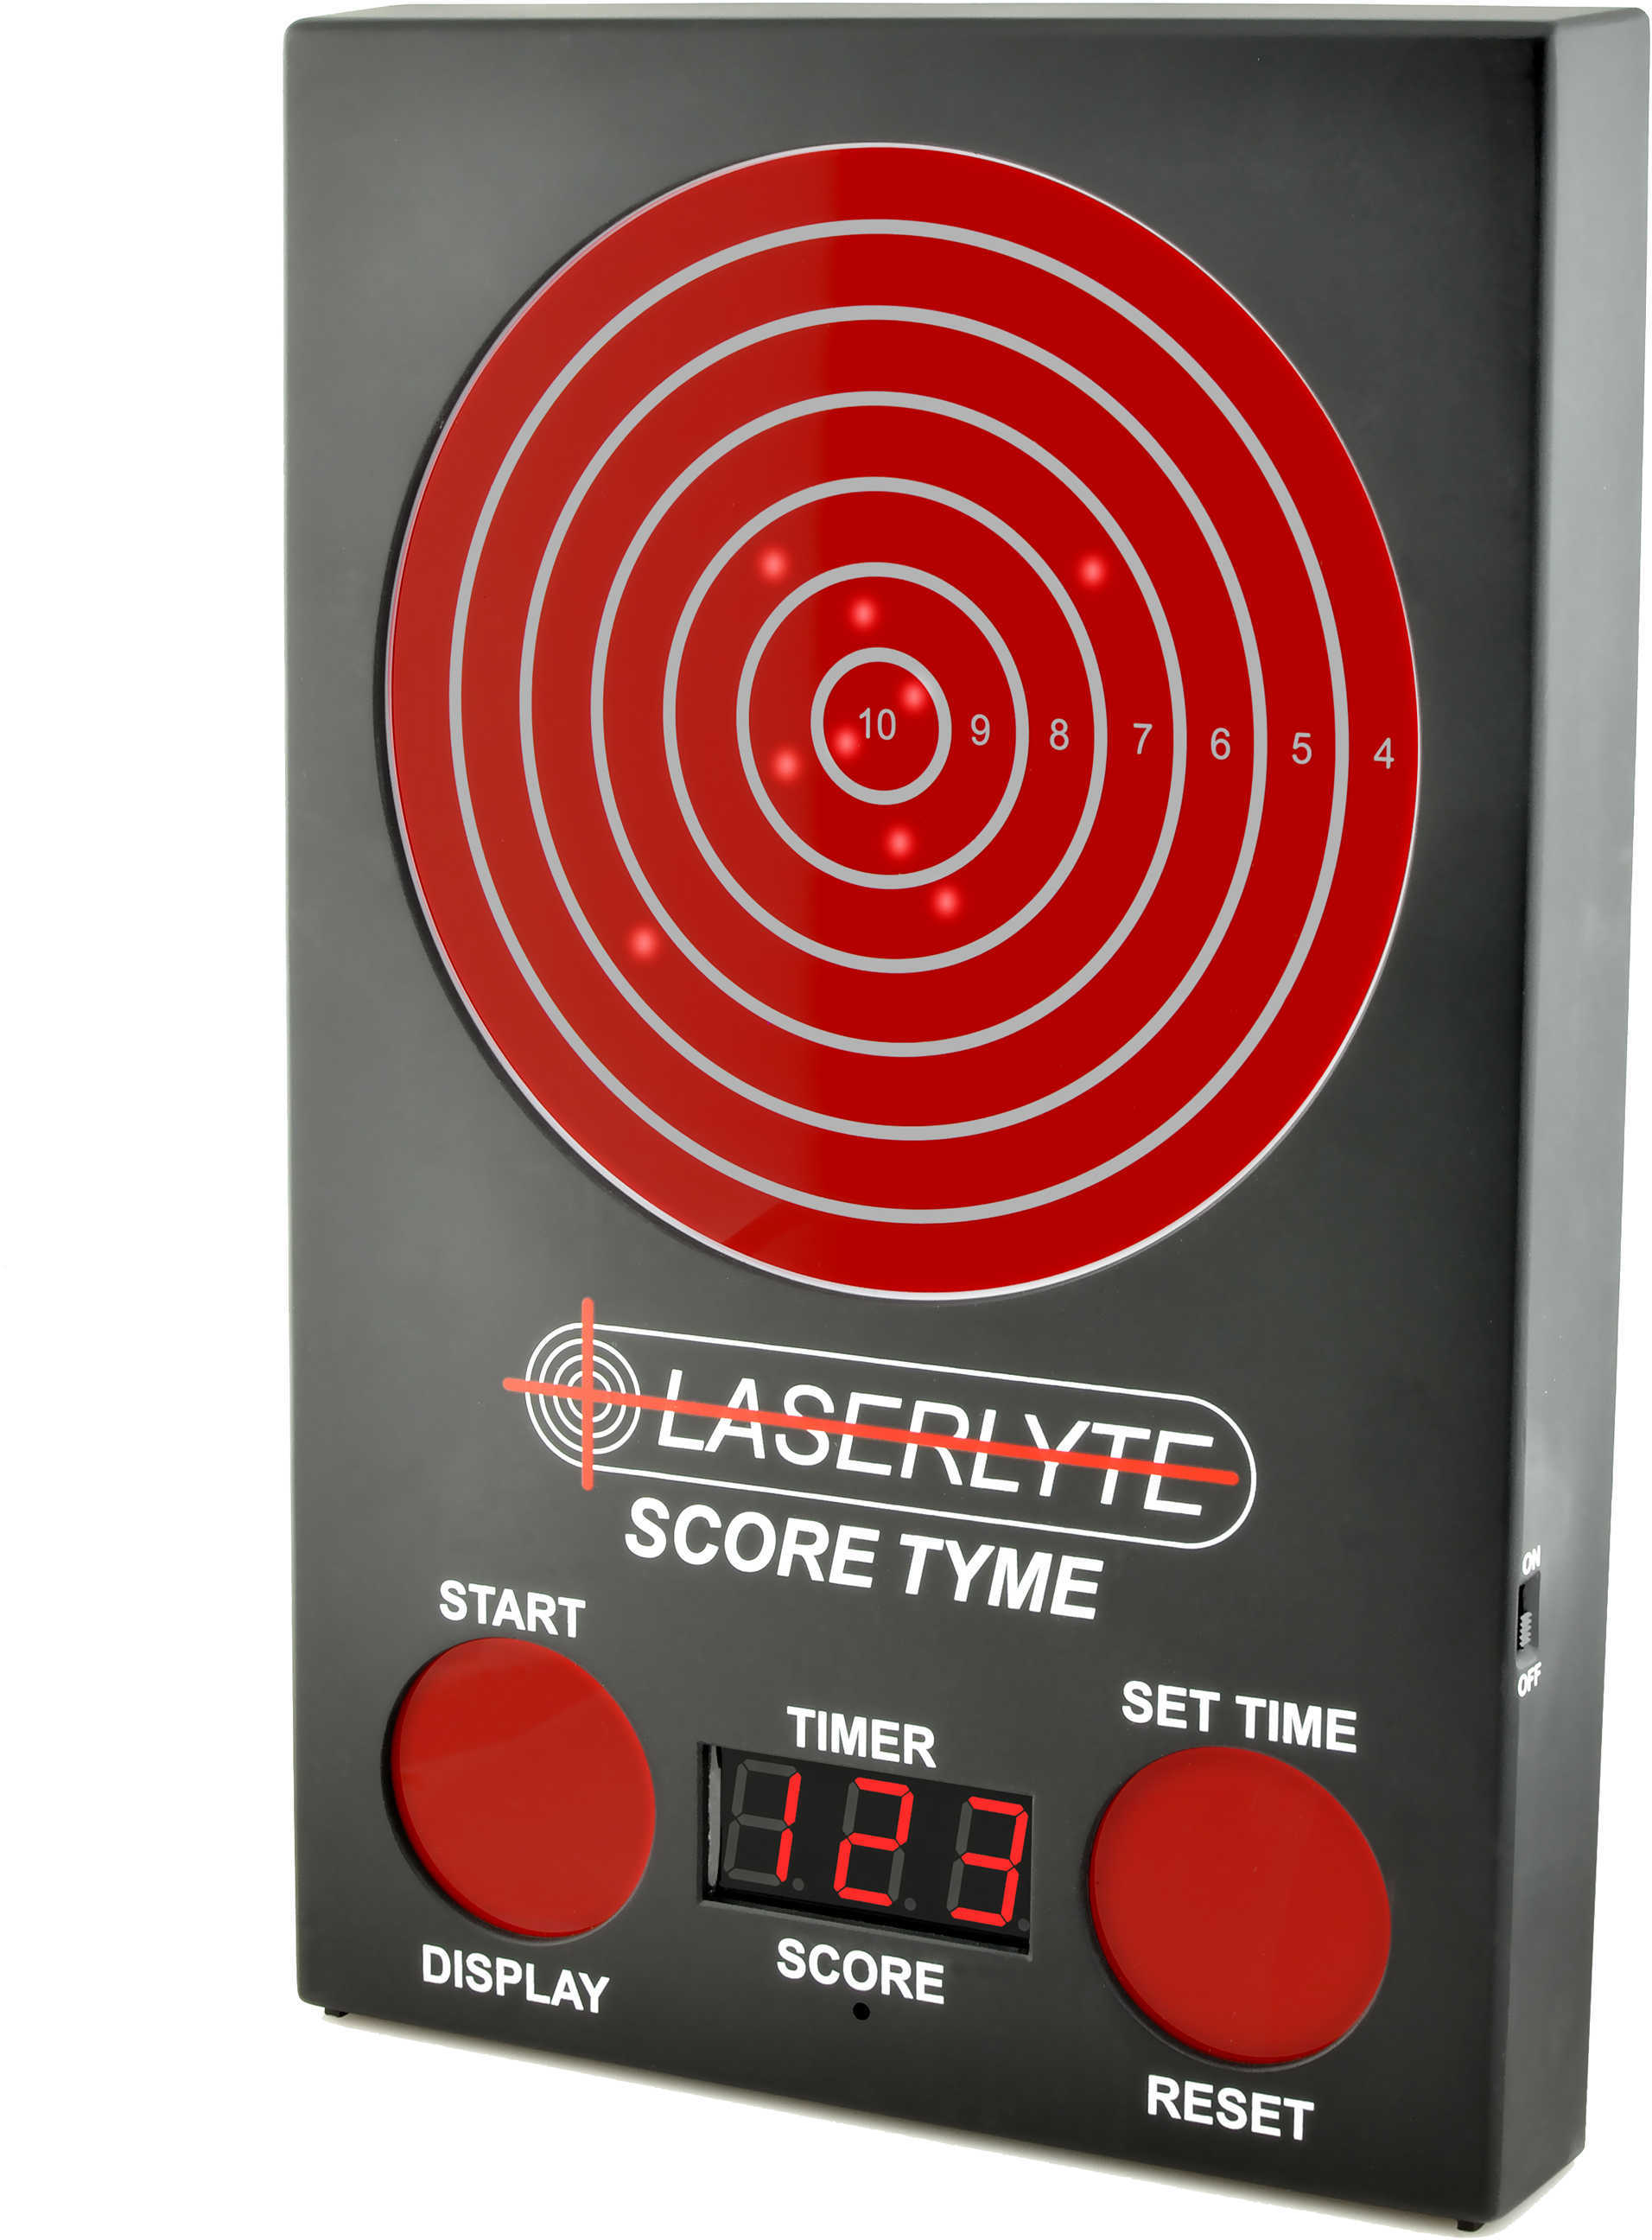 Laserlyte TLBXL Trainer Score Tyme Target 1